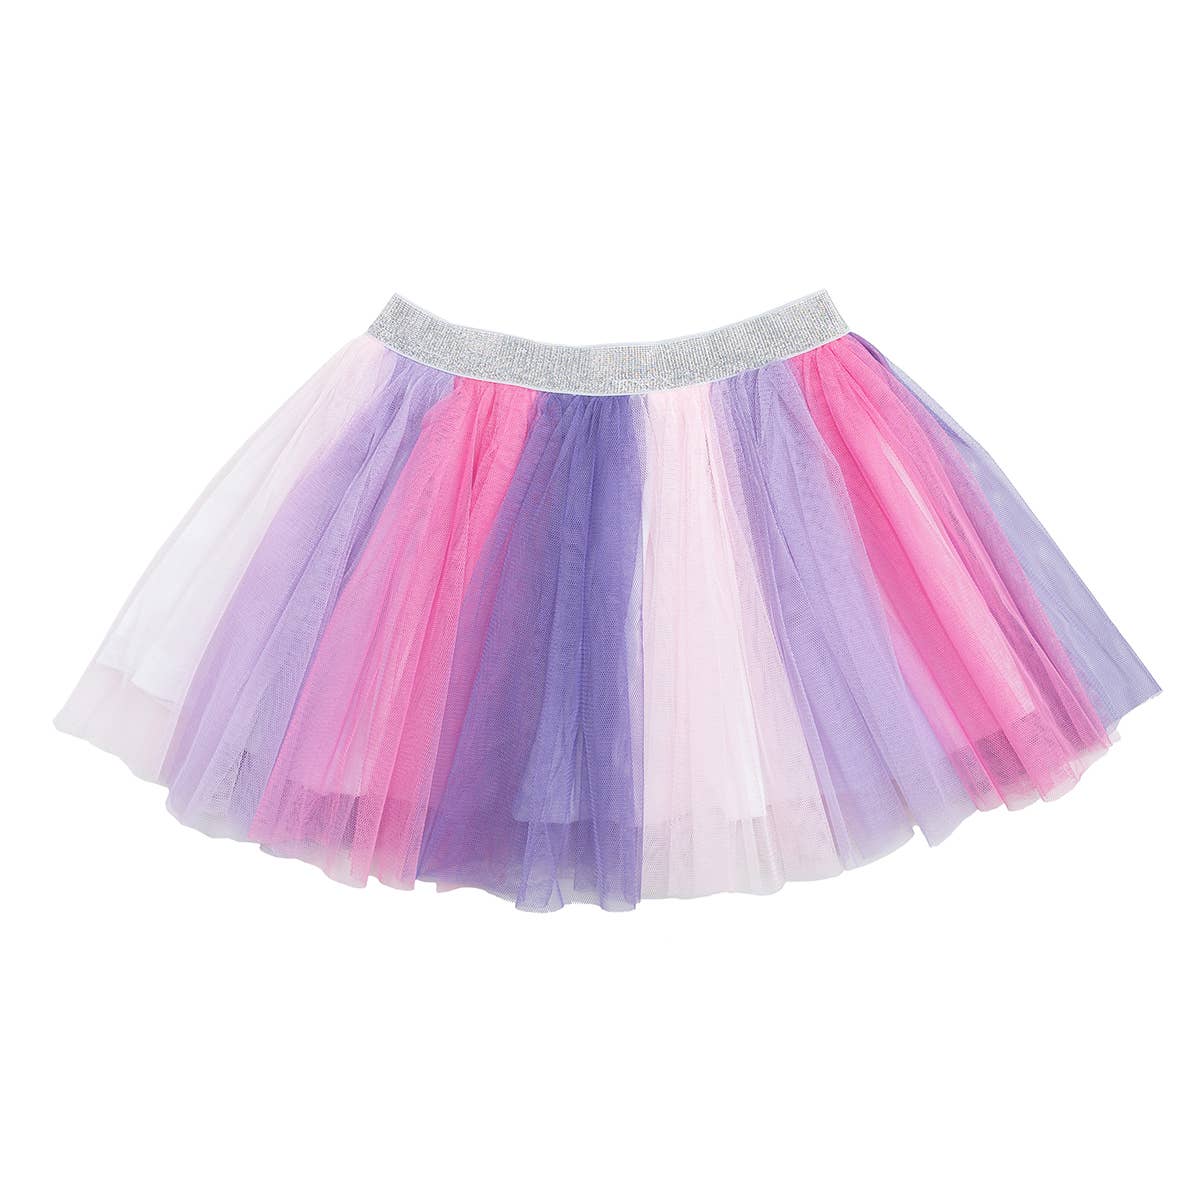 Sweet Wink - Lavender Pink Fairy Tutu - Dress Up Skirt - Valentine's Day